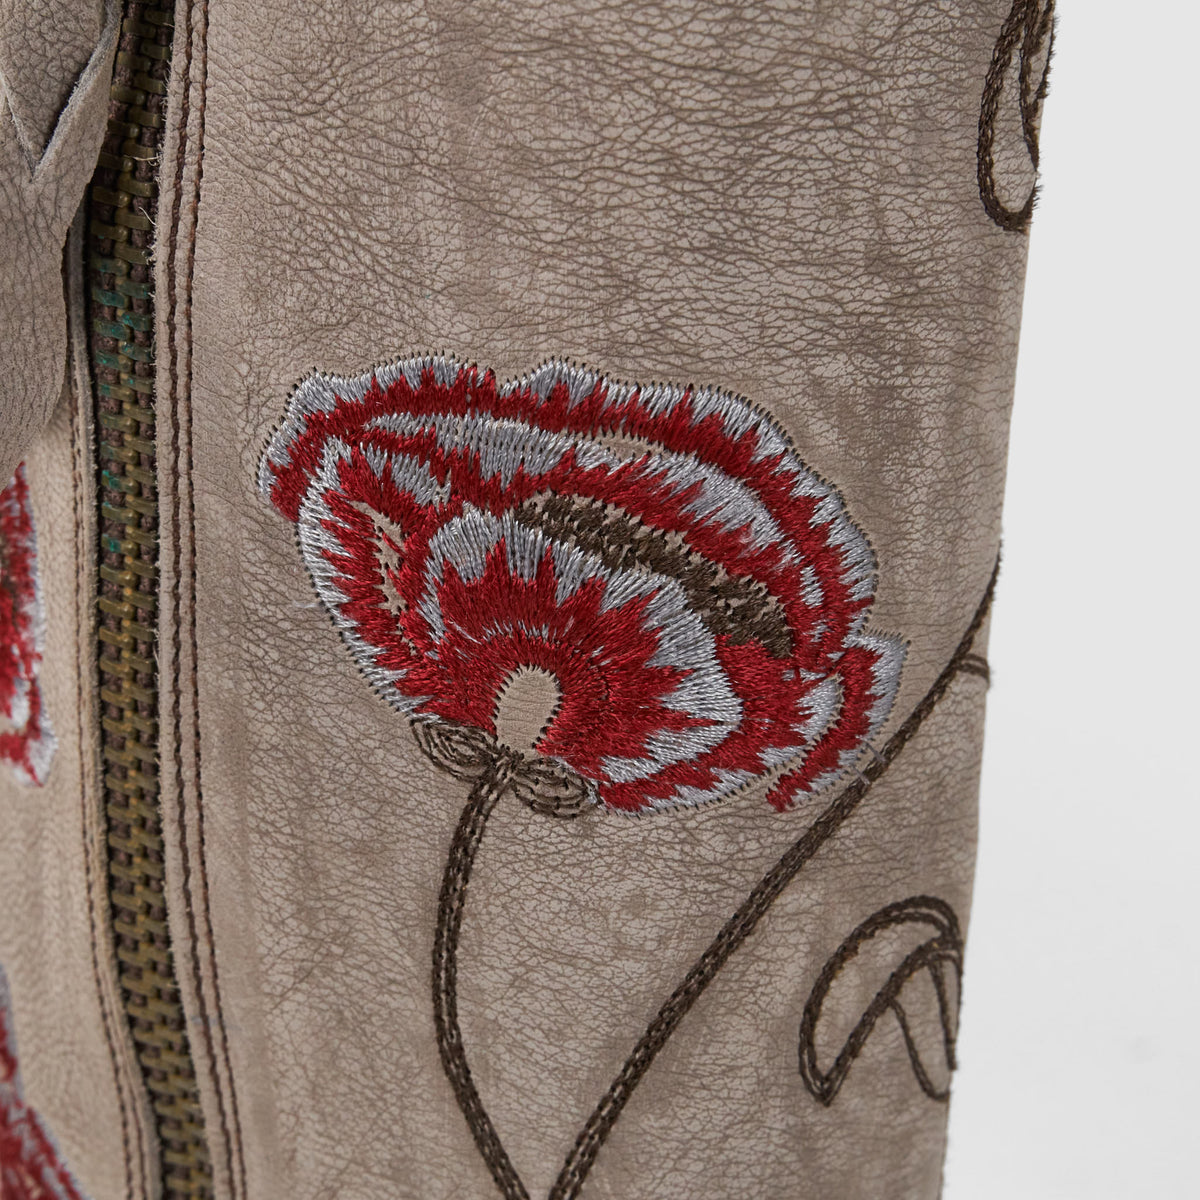 Sendra Ladies Flower Embroidered Western Boot